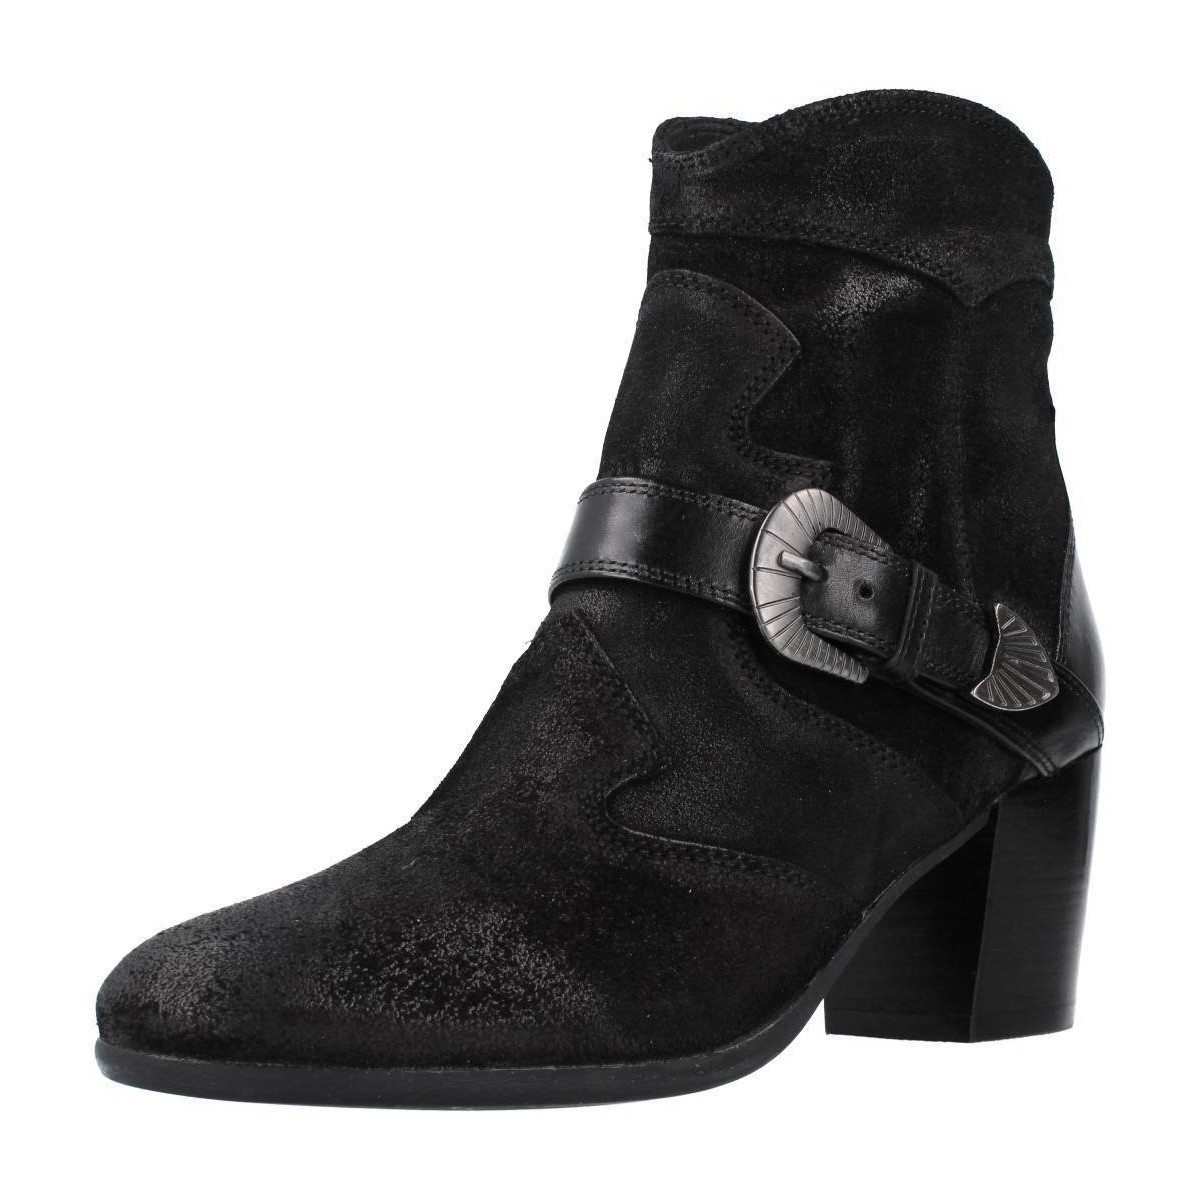 Chaussures Femme Bottines Geox D NEW LUCINDA Noir